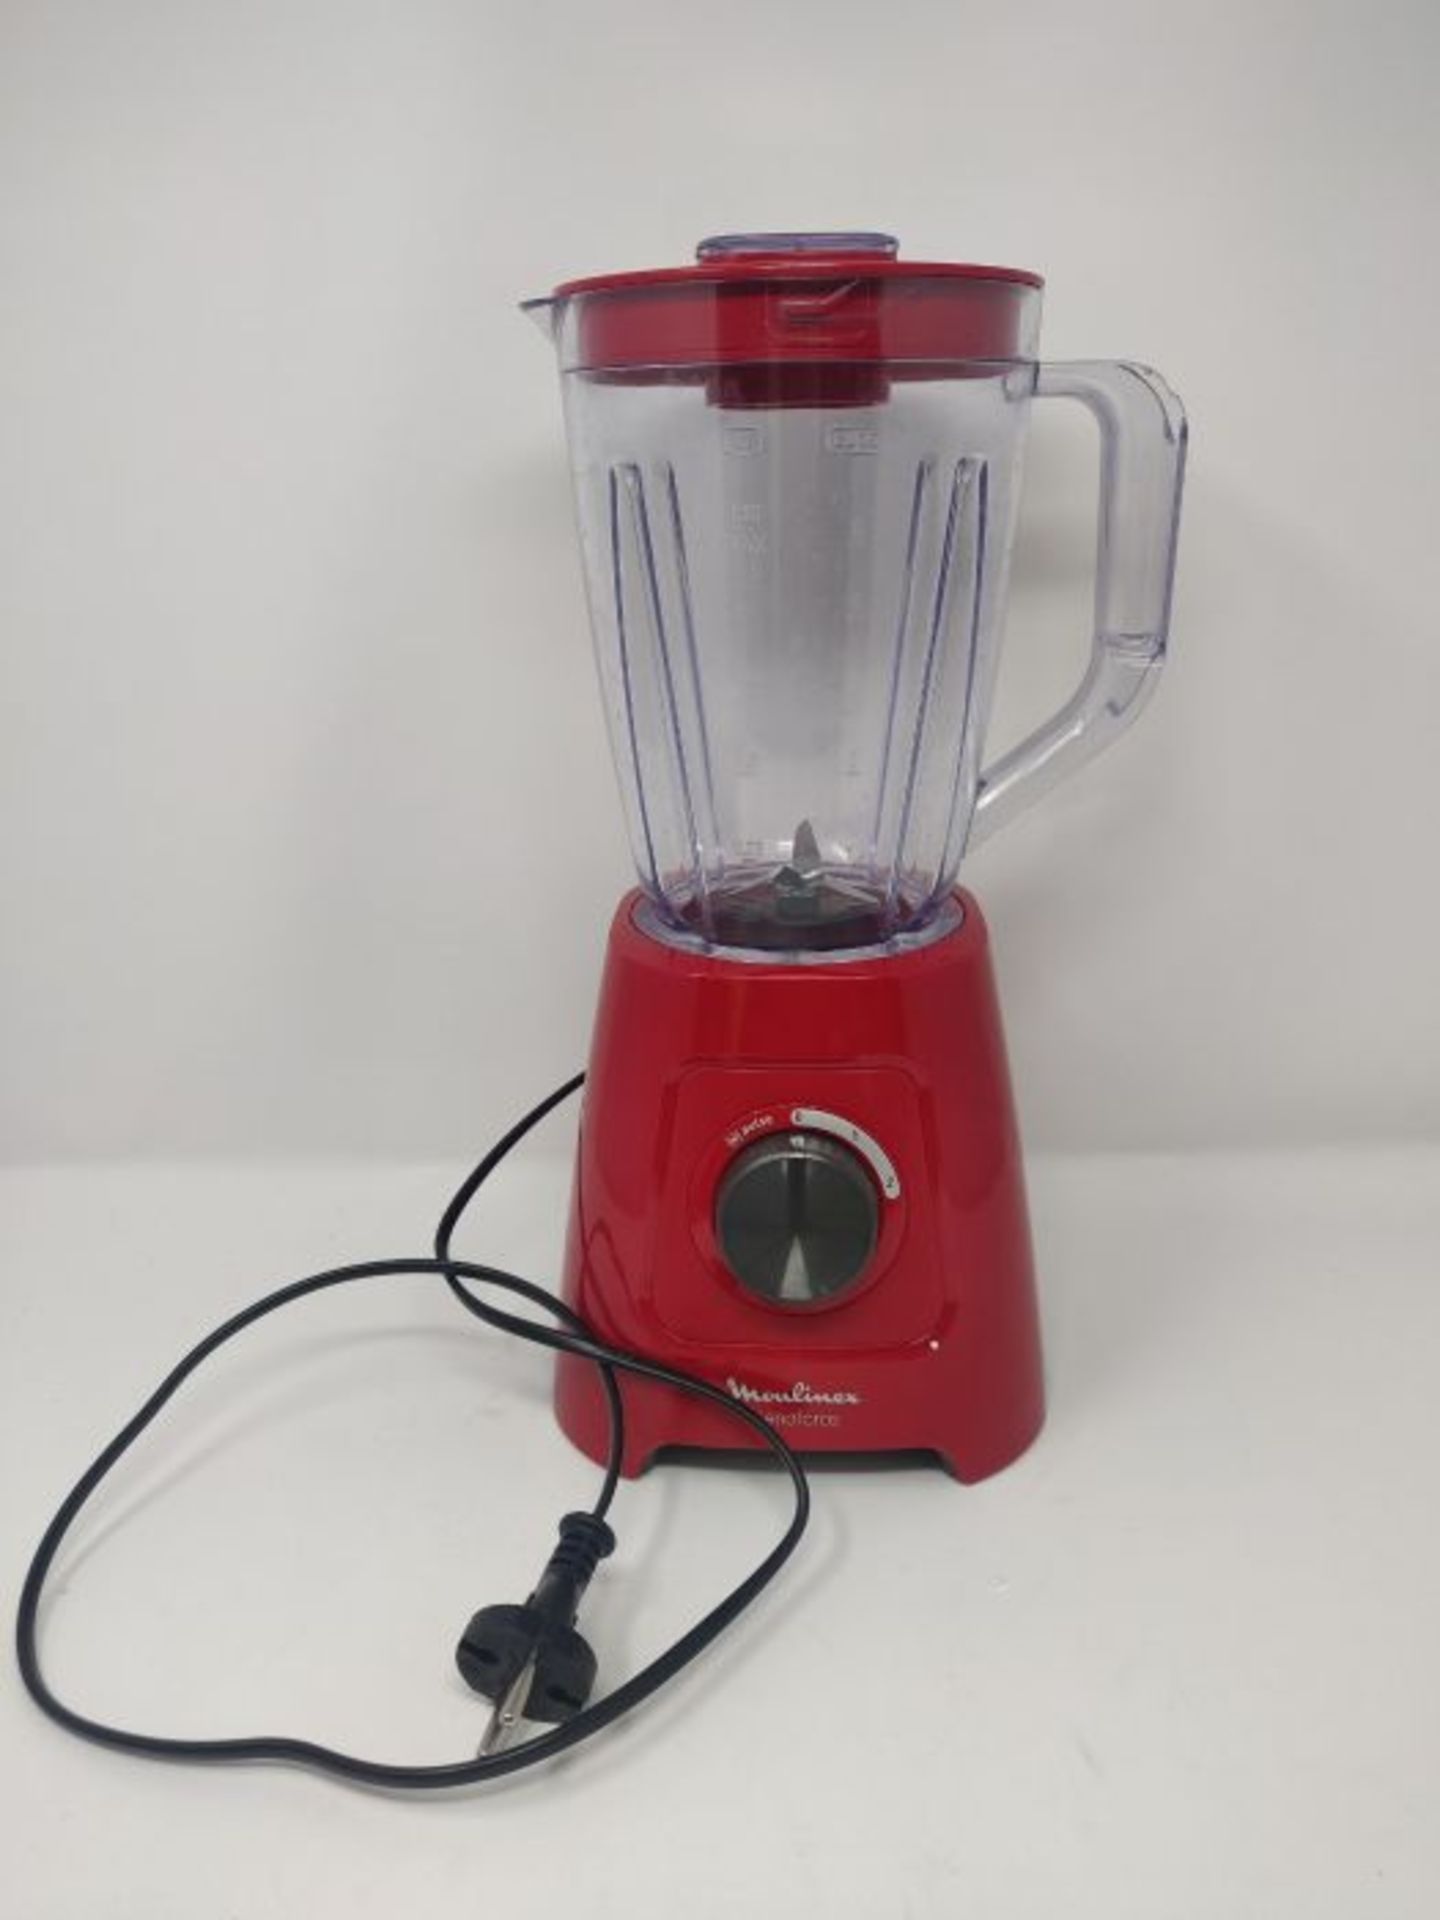 [CRACKED] Moulinex Blend Blender, 550 Watt, Red - Image 3 of 3